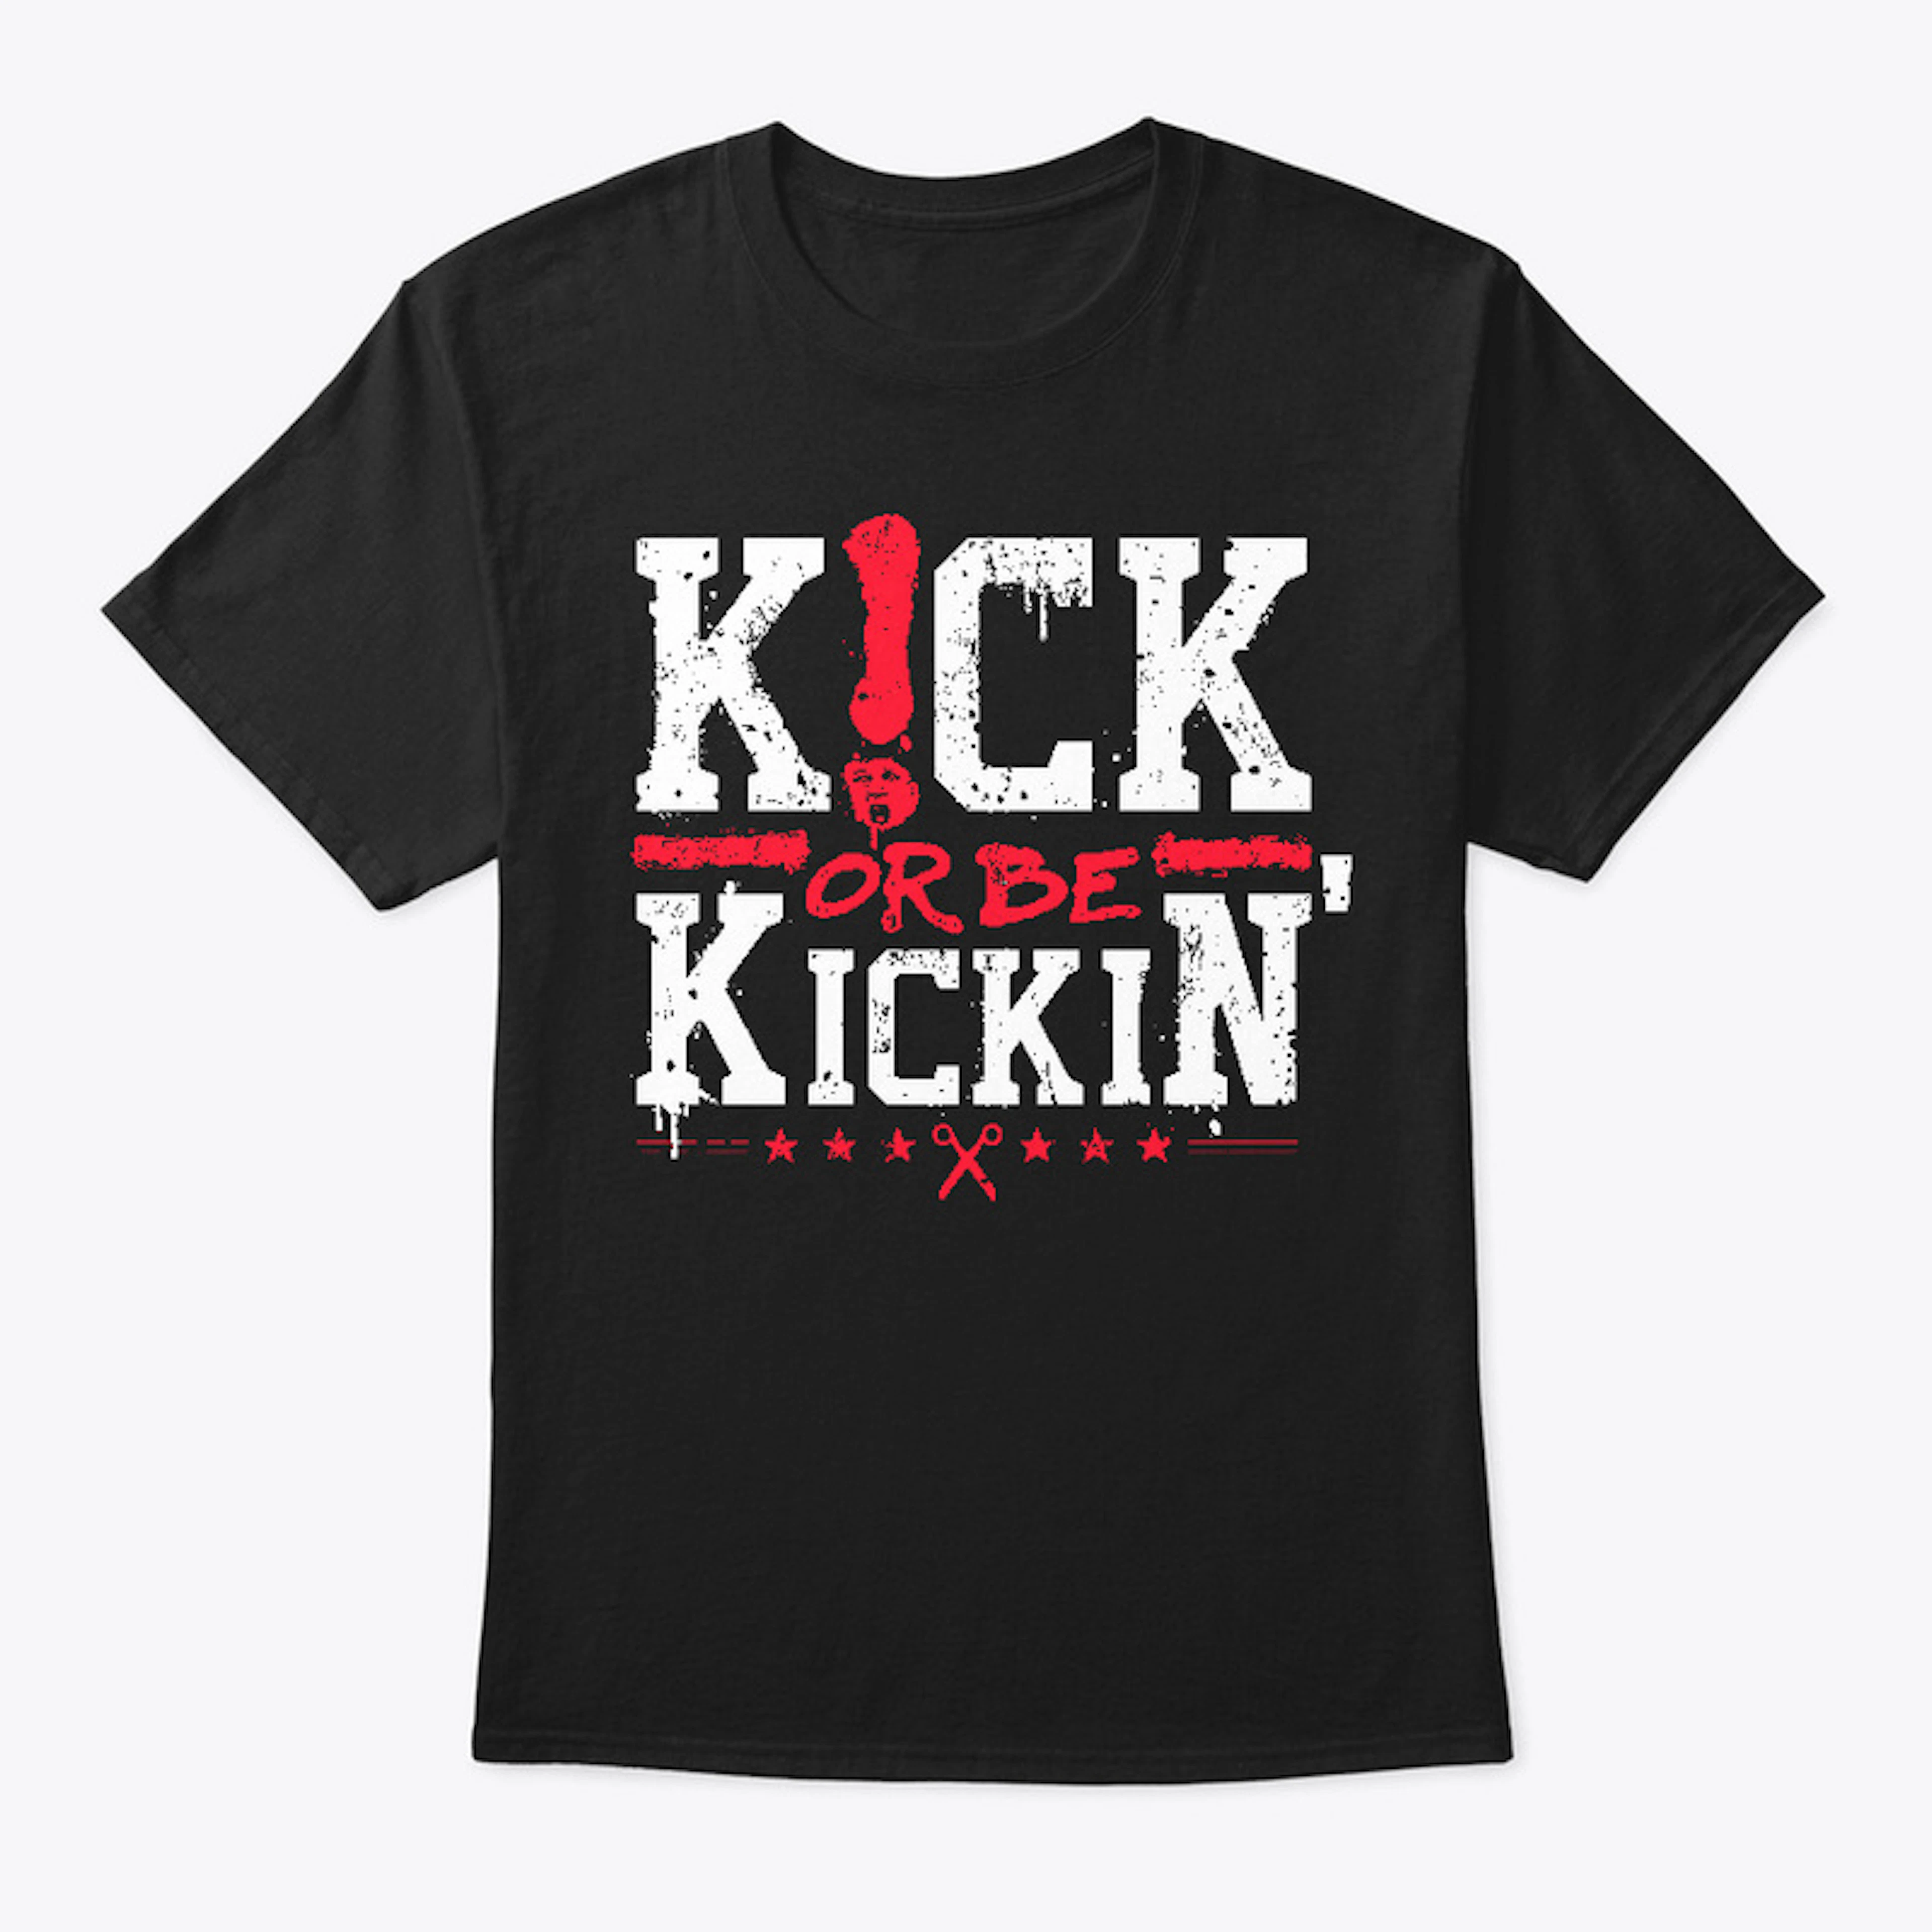 Kick or be Kickin'